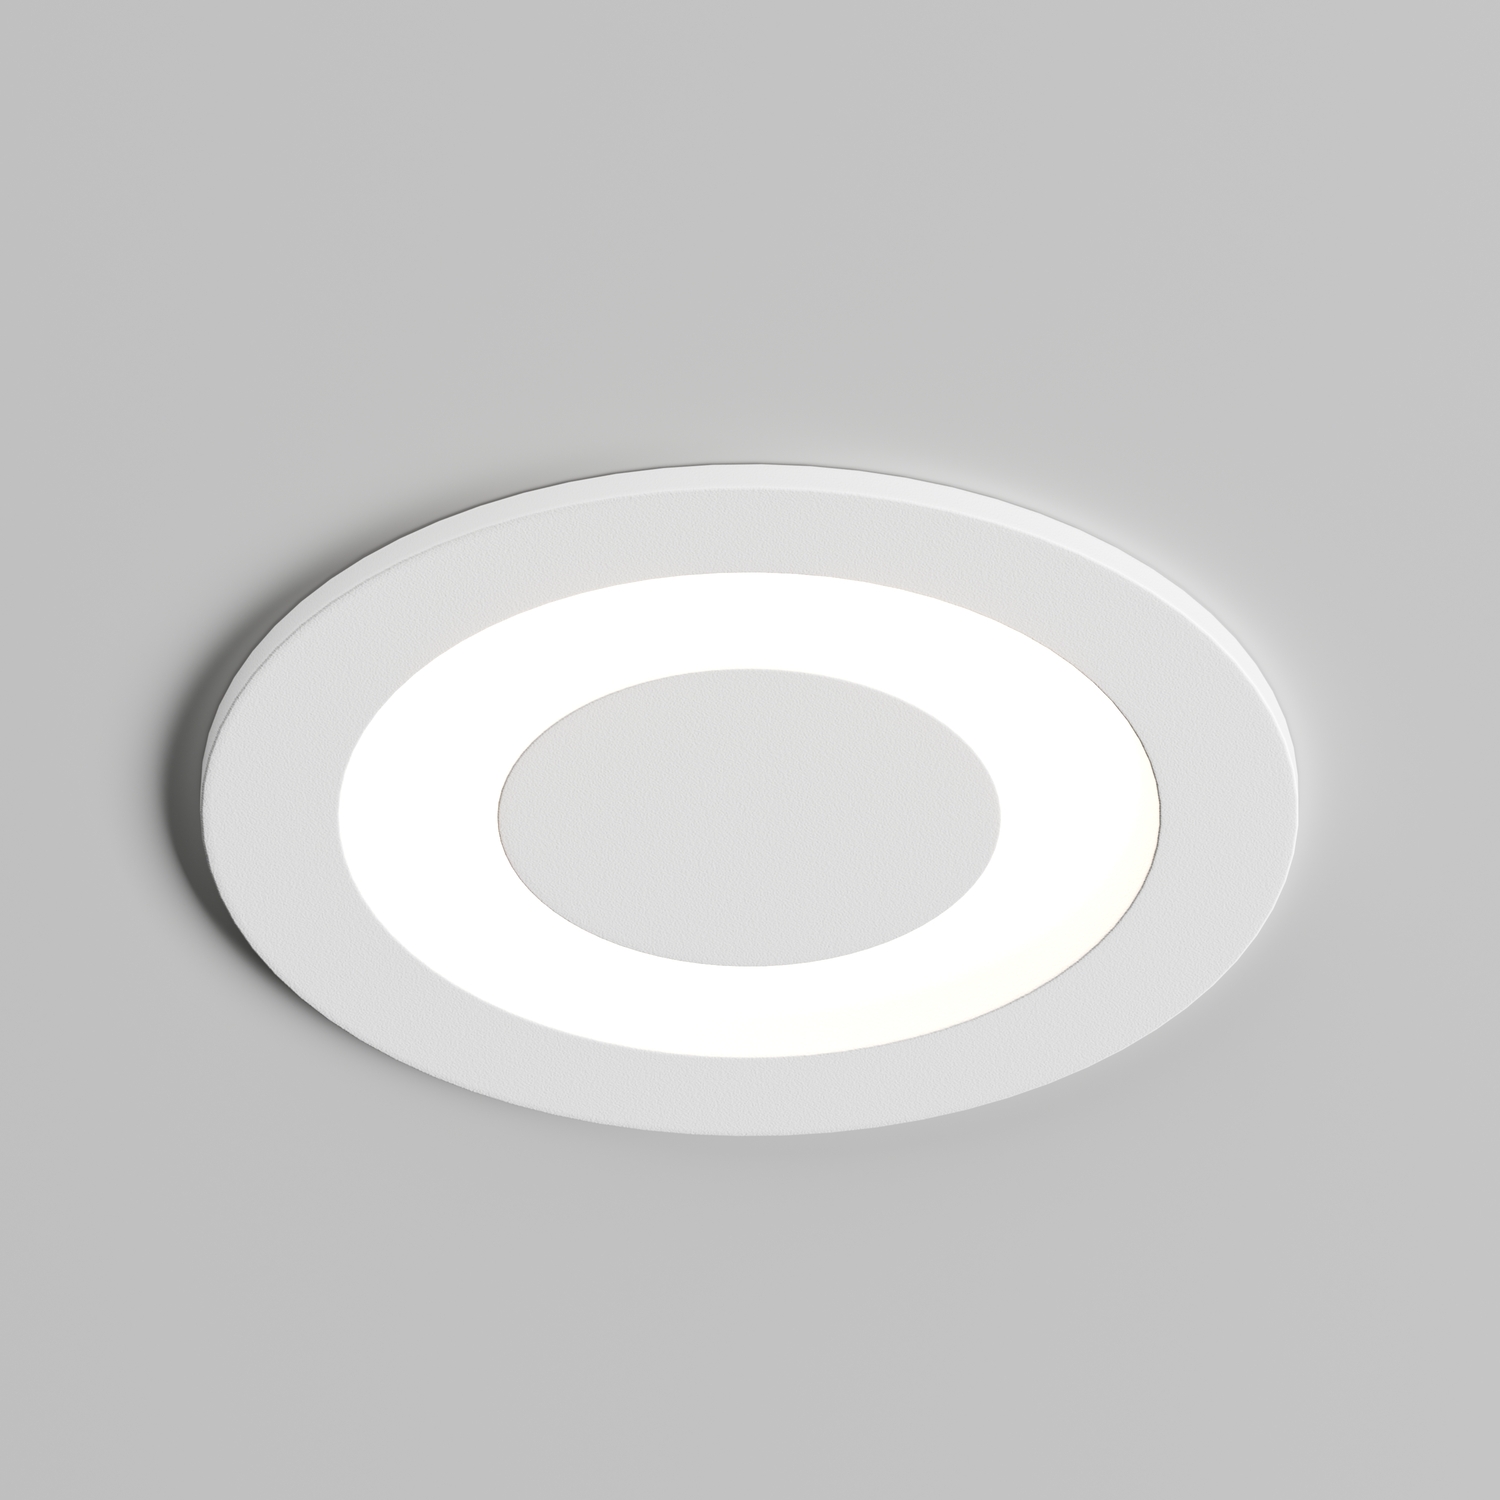 Встраиваемый светильник LED 3000 белый алюминий Denkirs DK2700-WH DK2700-WH